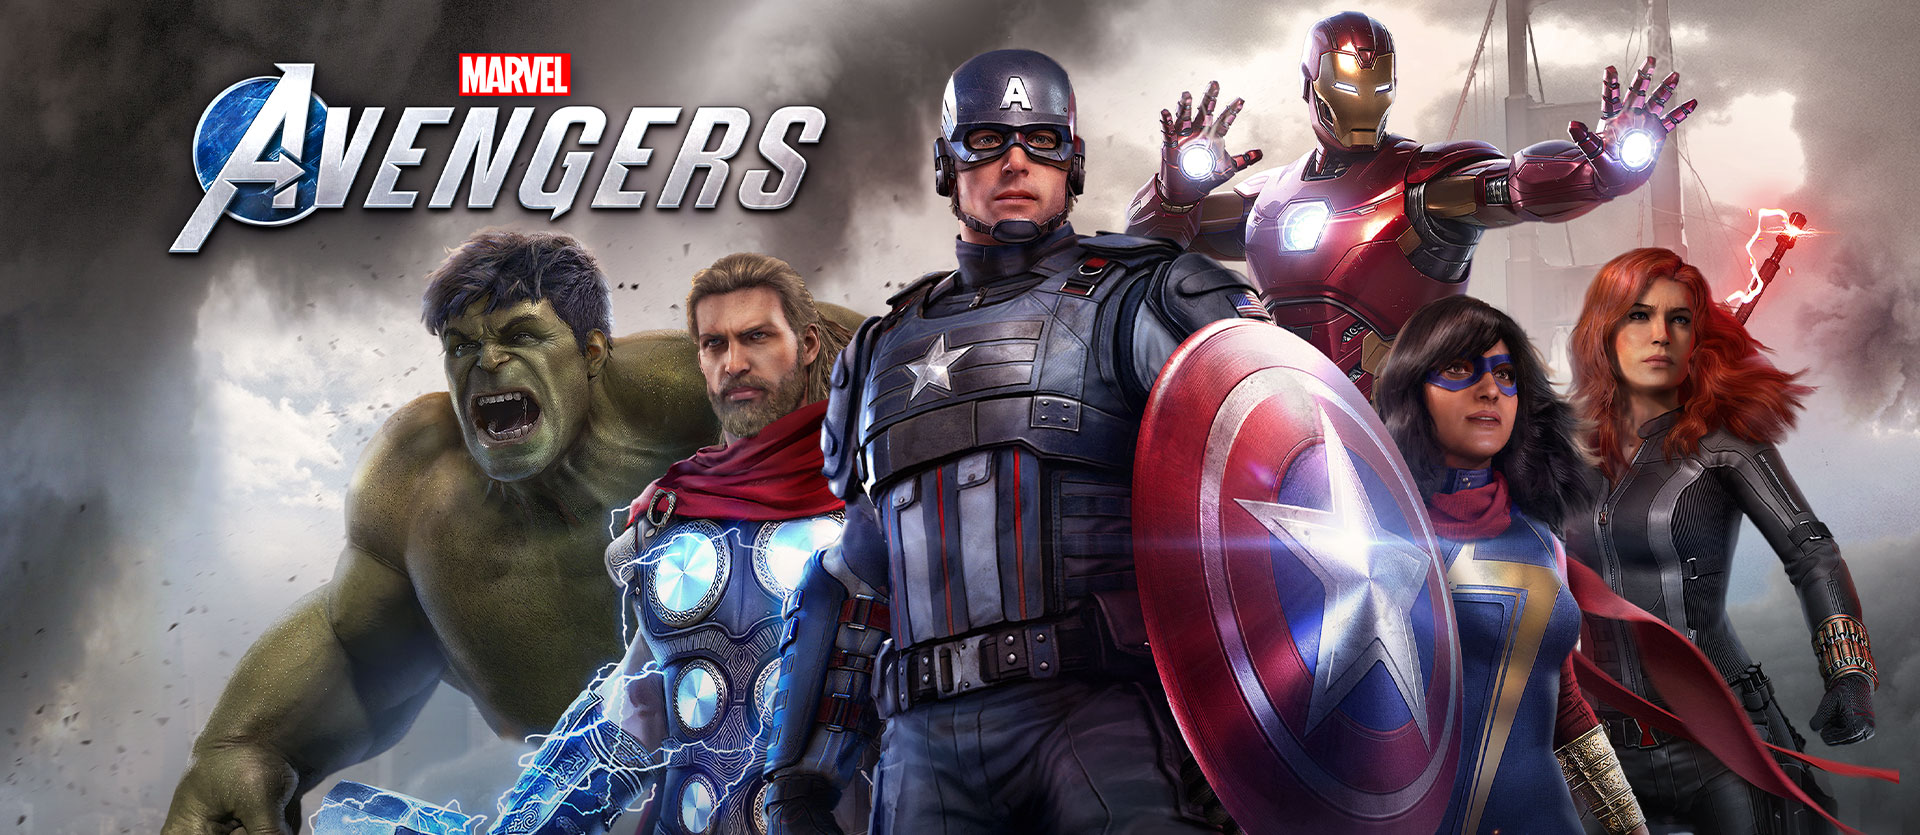 Marvels Avengers Xbox One